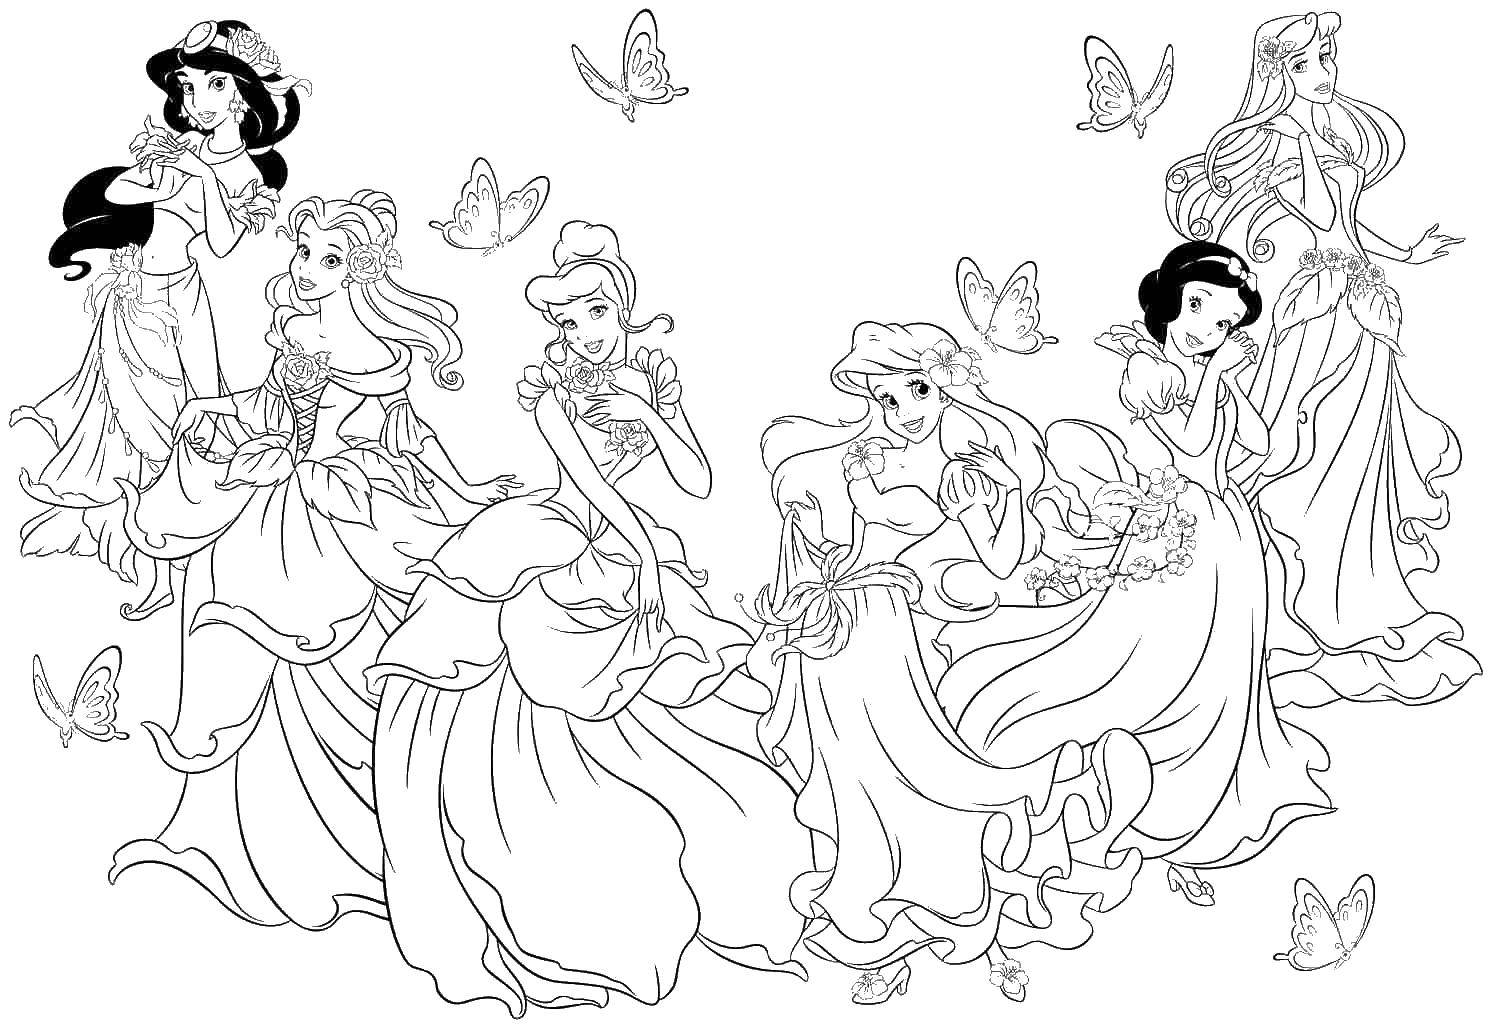 Coloring Disney Princess and butterflies. Category Princess. Tags:  princesses, butterflies, cartoons, Disney.